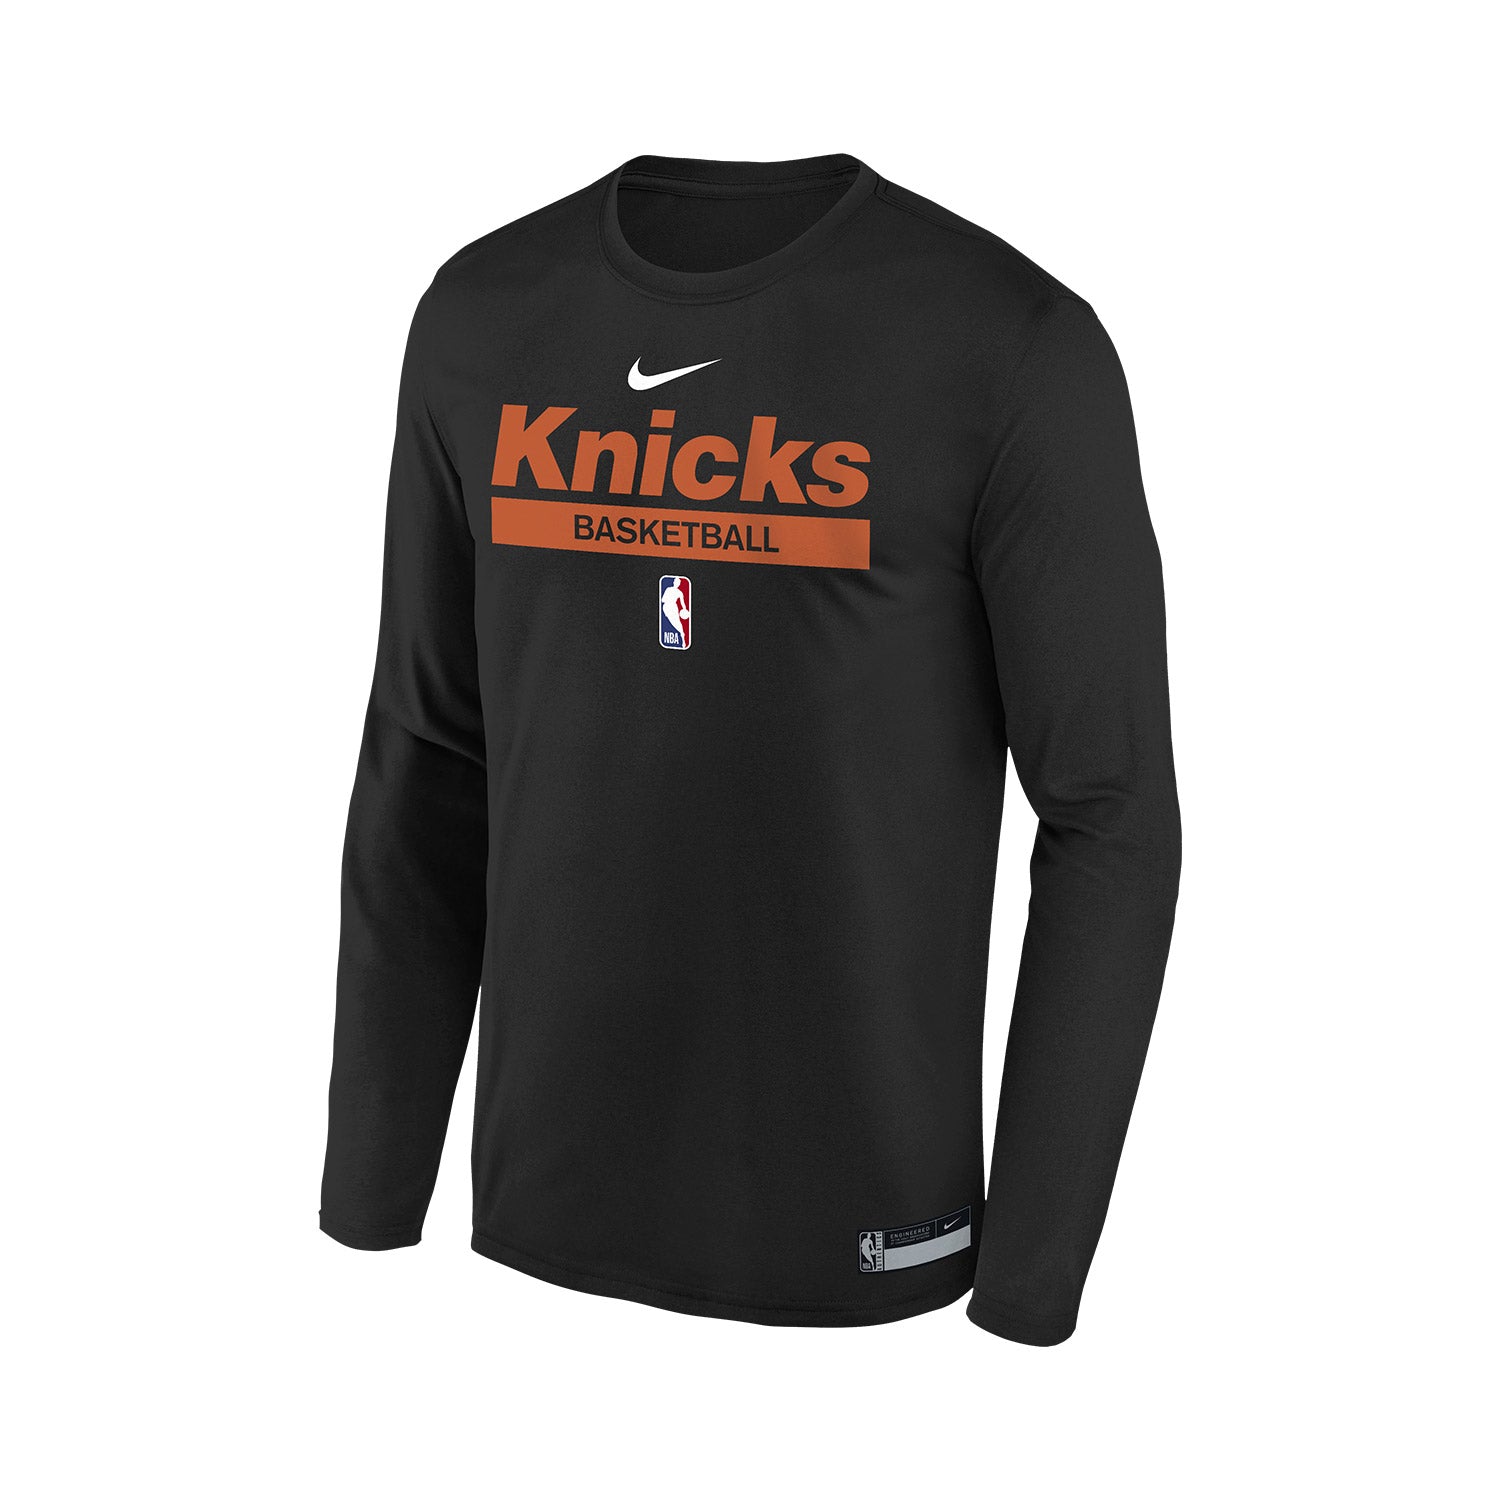 Youth Nike Knicks Dri-Fit Practice Graphic Longsleeve Tee